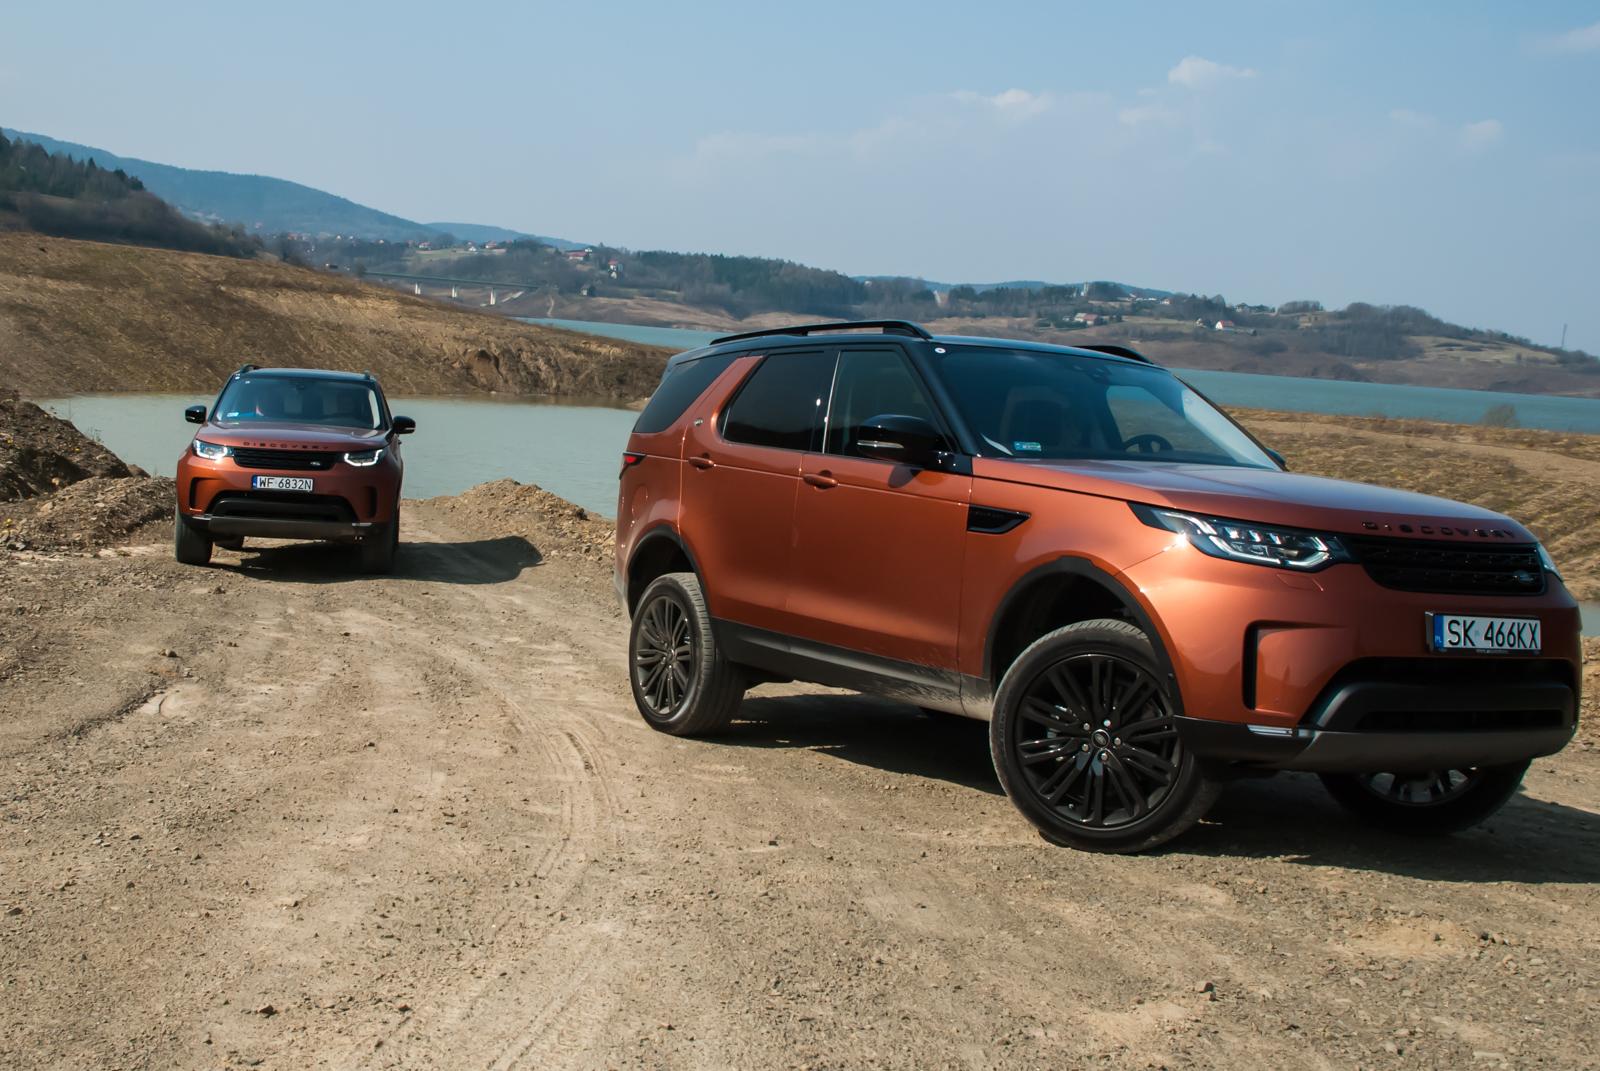 Land Rover Discovery piąte wcielenie legendy